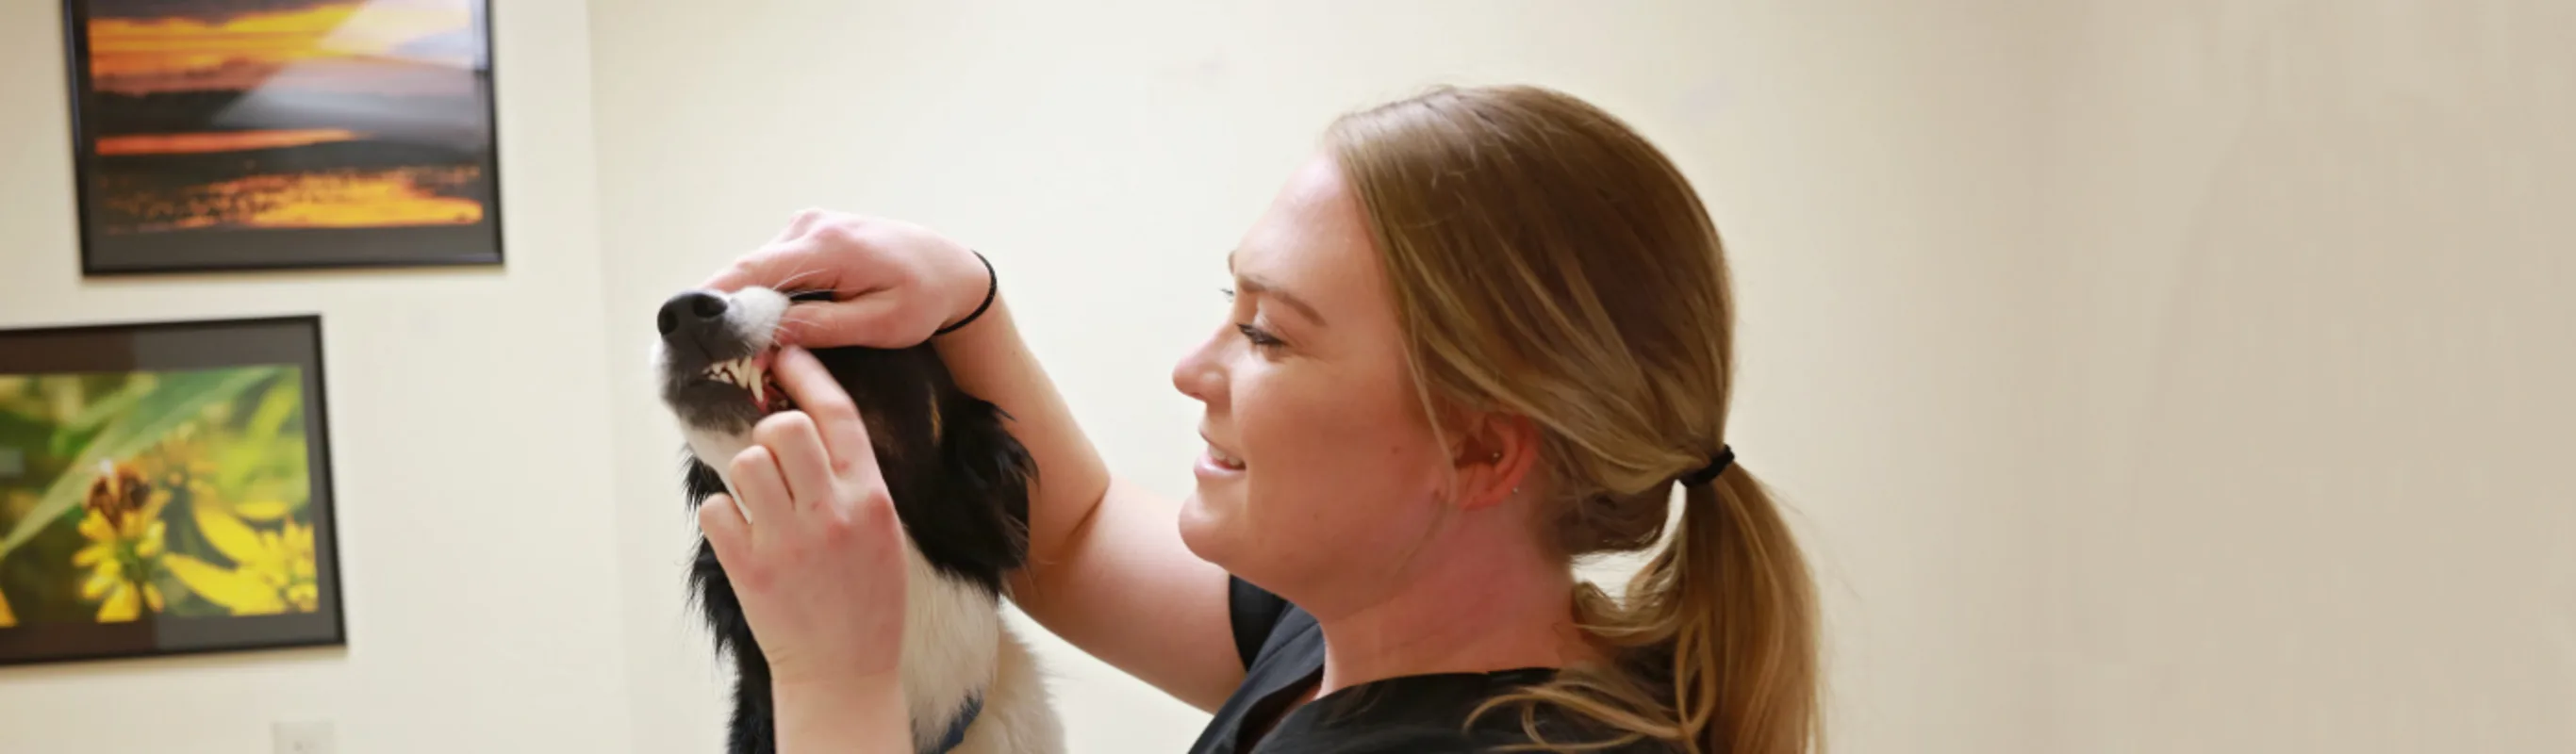 Staff examine dogs teeth at Ferry Farm Animal Clinic